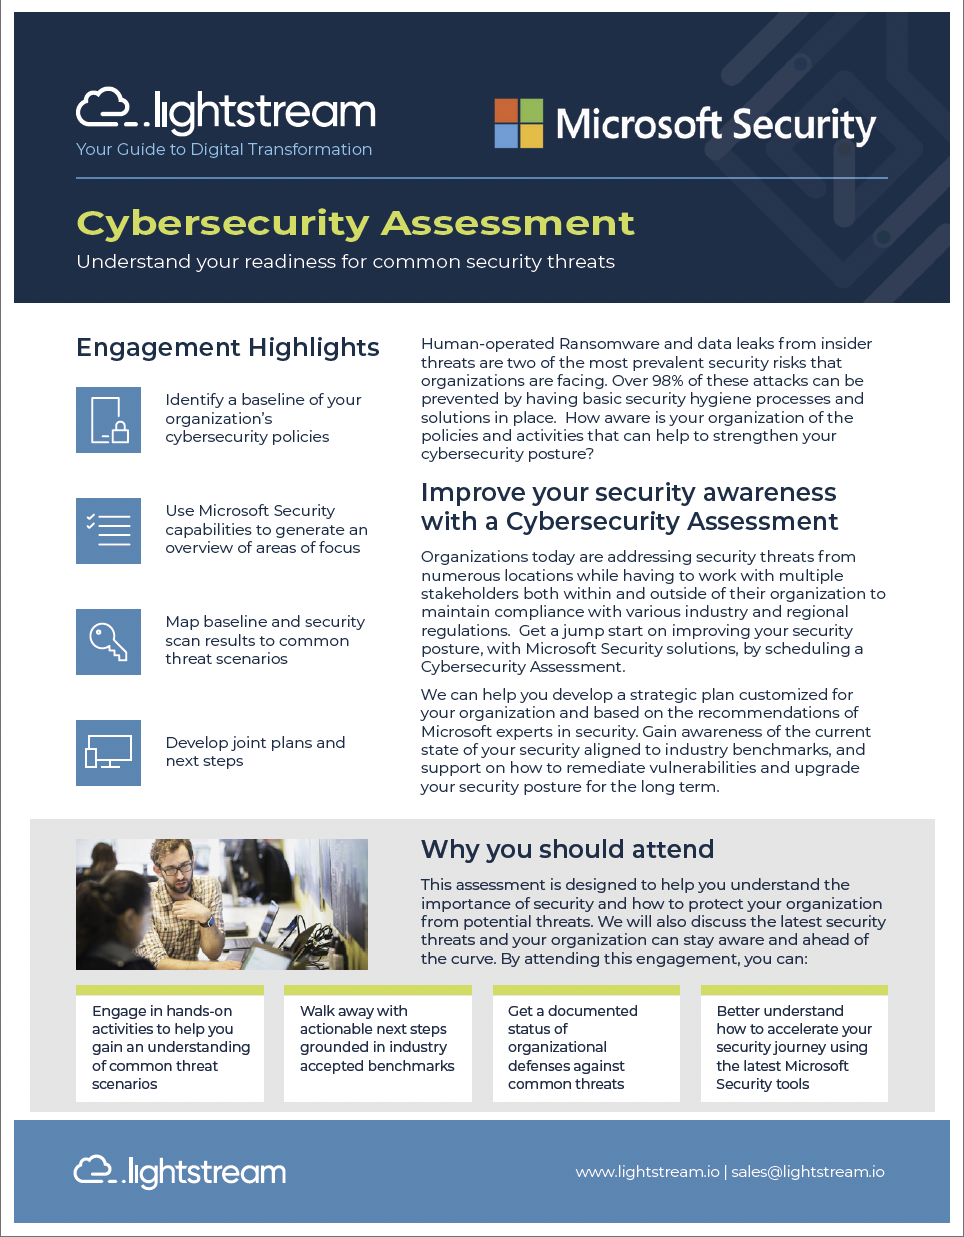 Lightstream Microsoft Cybersecurity Assessment flyer